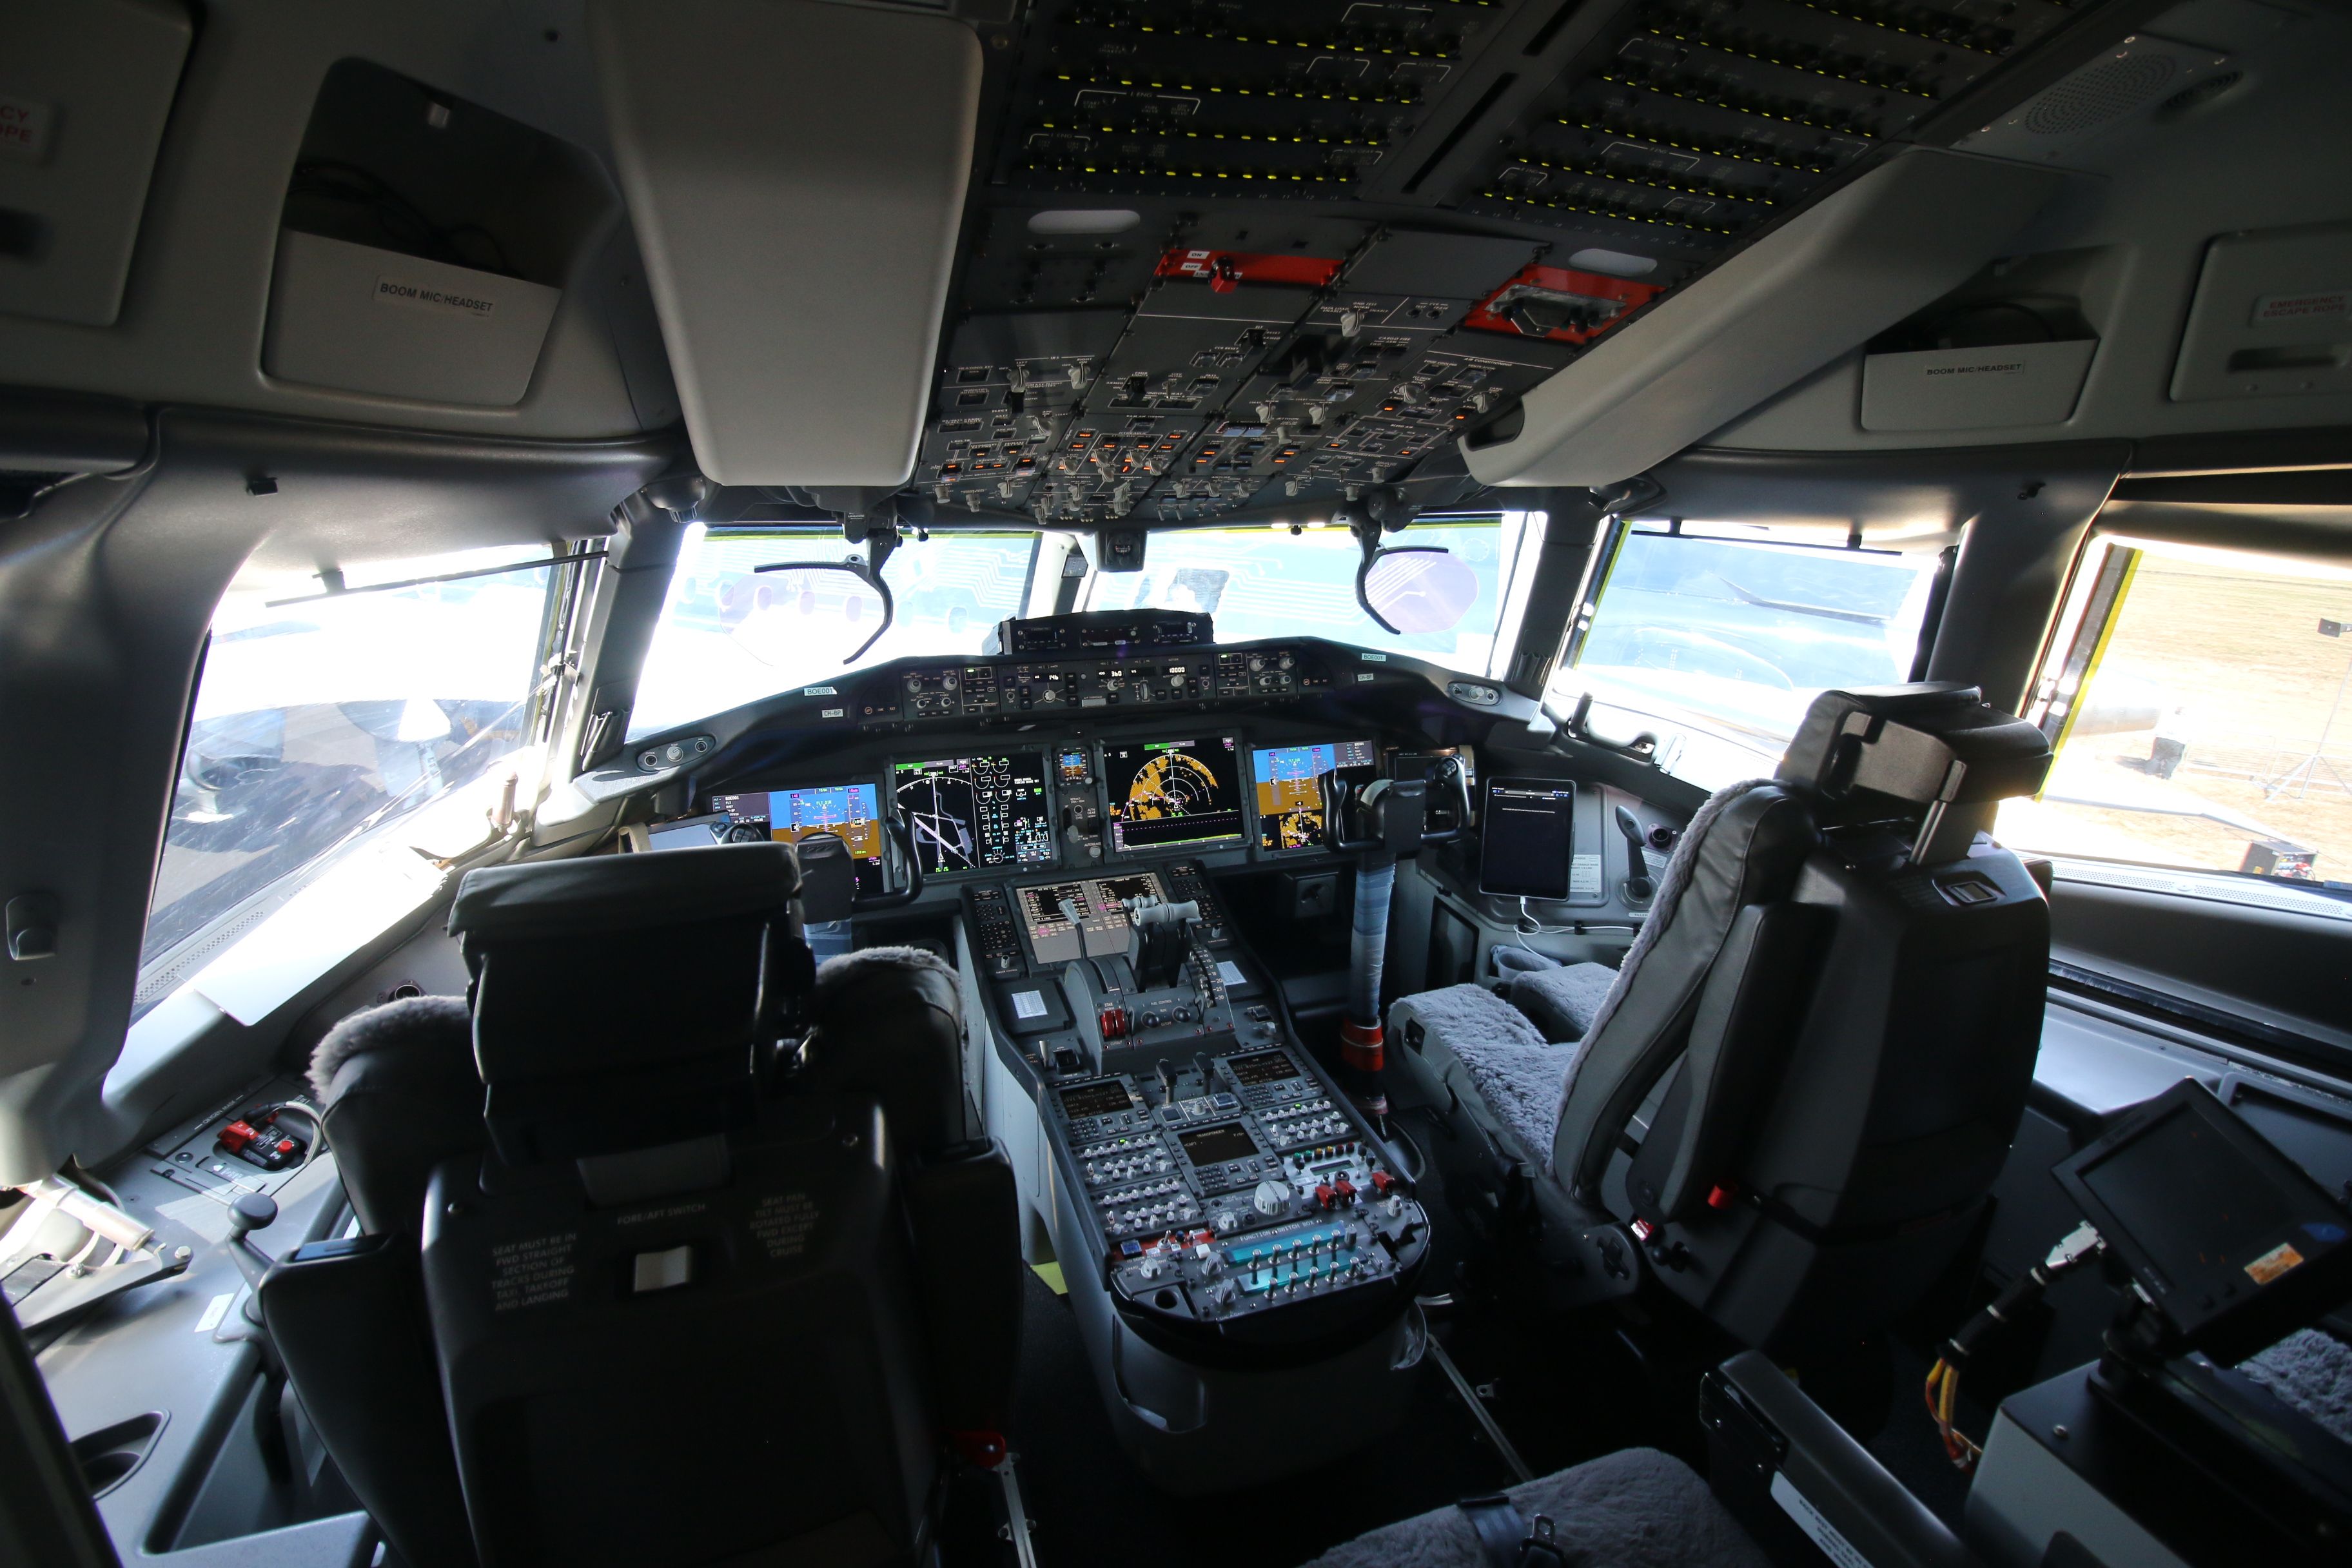 The 777X cockpit